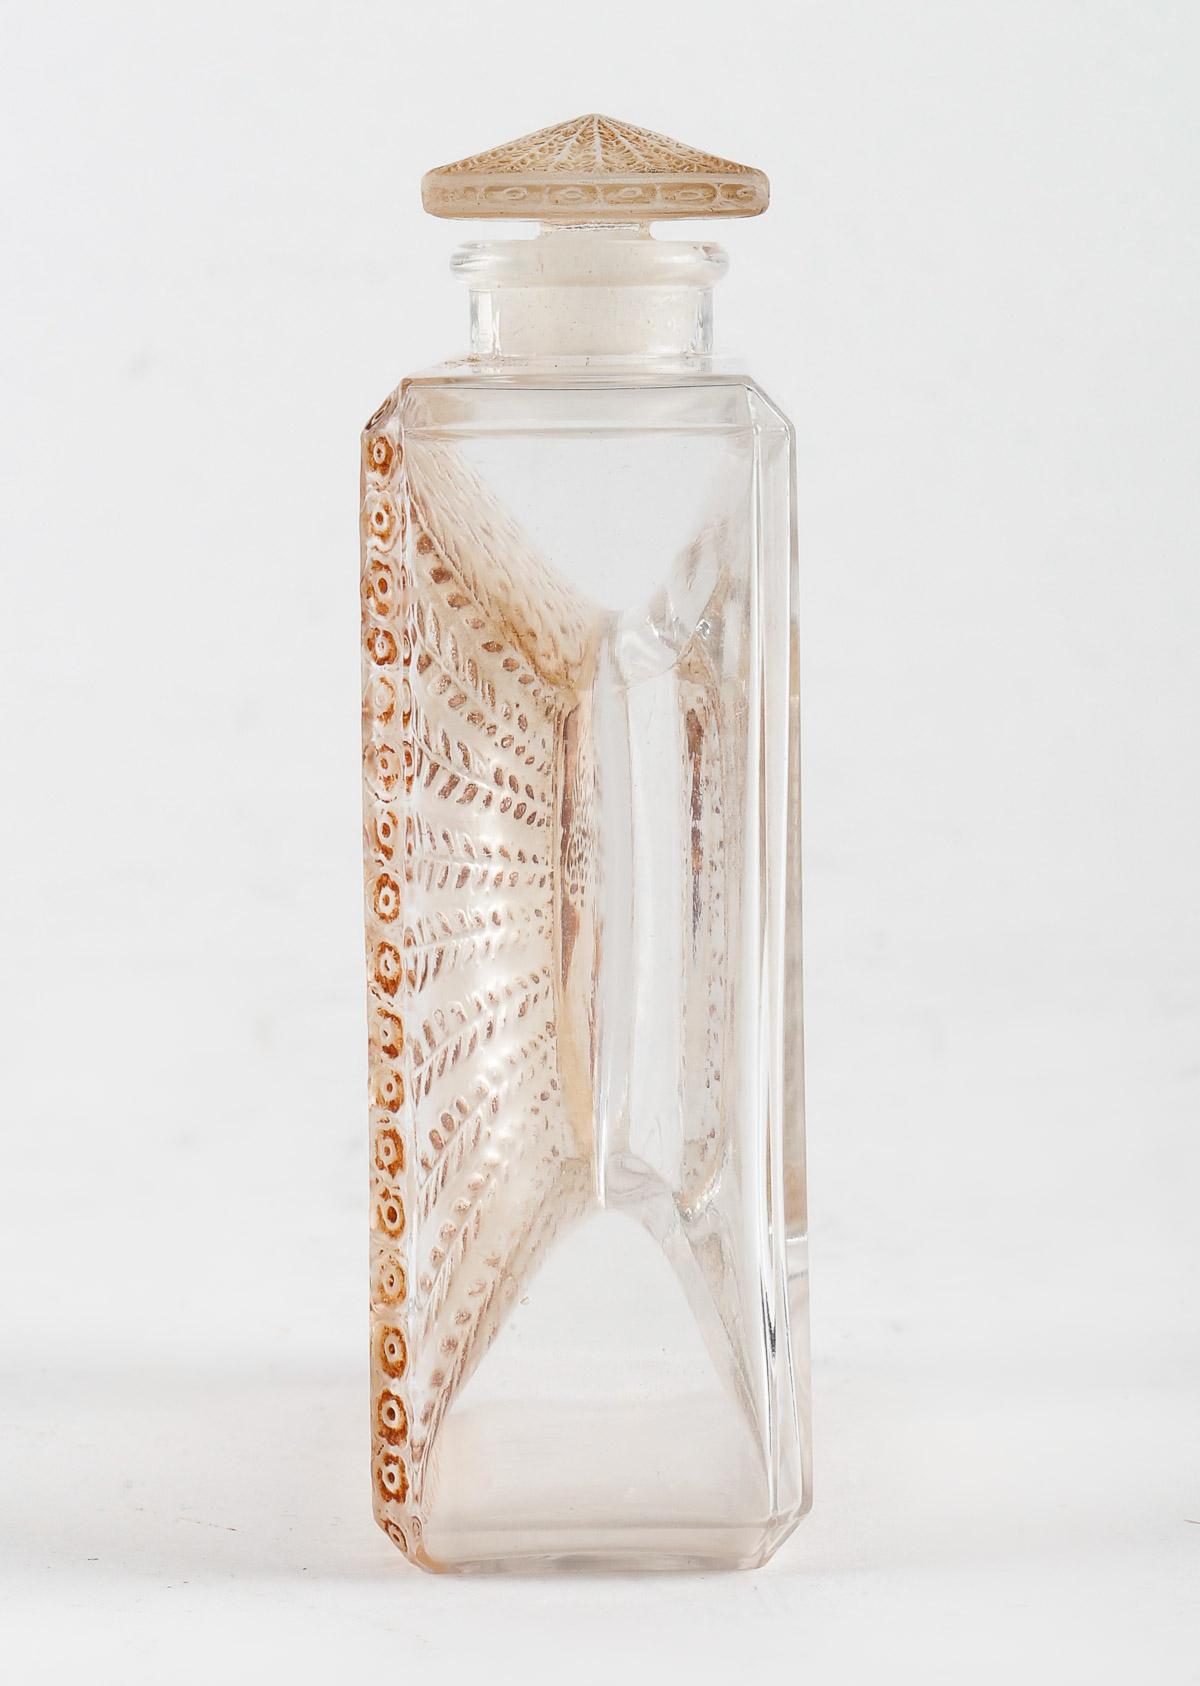 1925 Rene Lalique La Belle Saison Houbigant Parfümflasche Sepia gebeizt Glas (Art déco) im Angebot